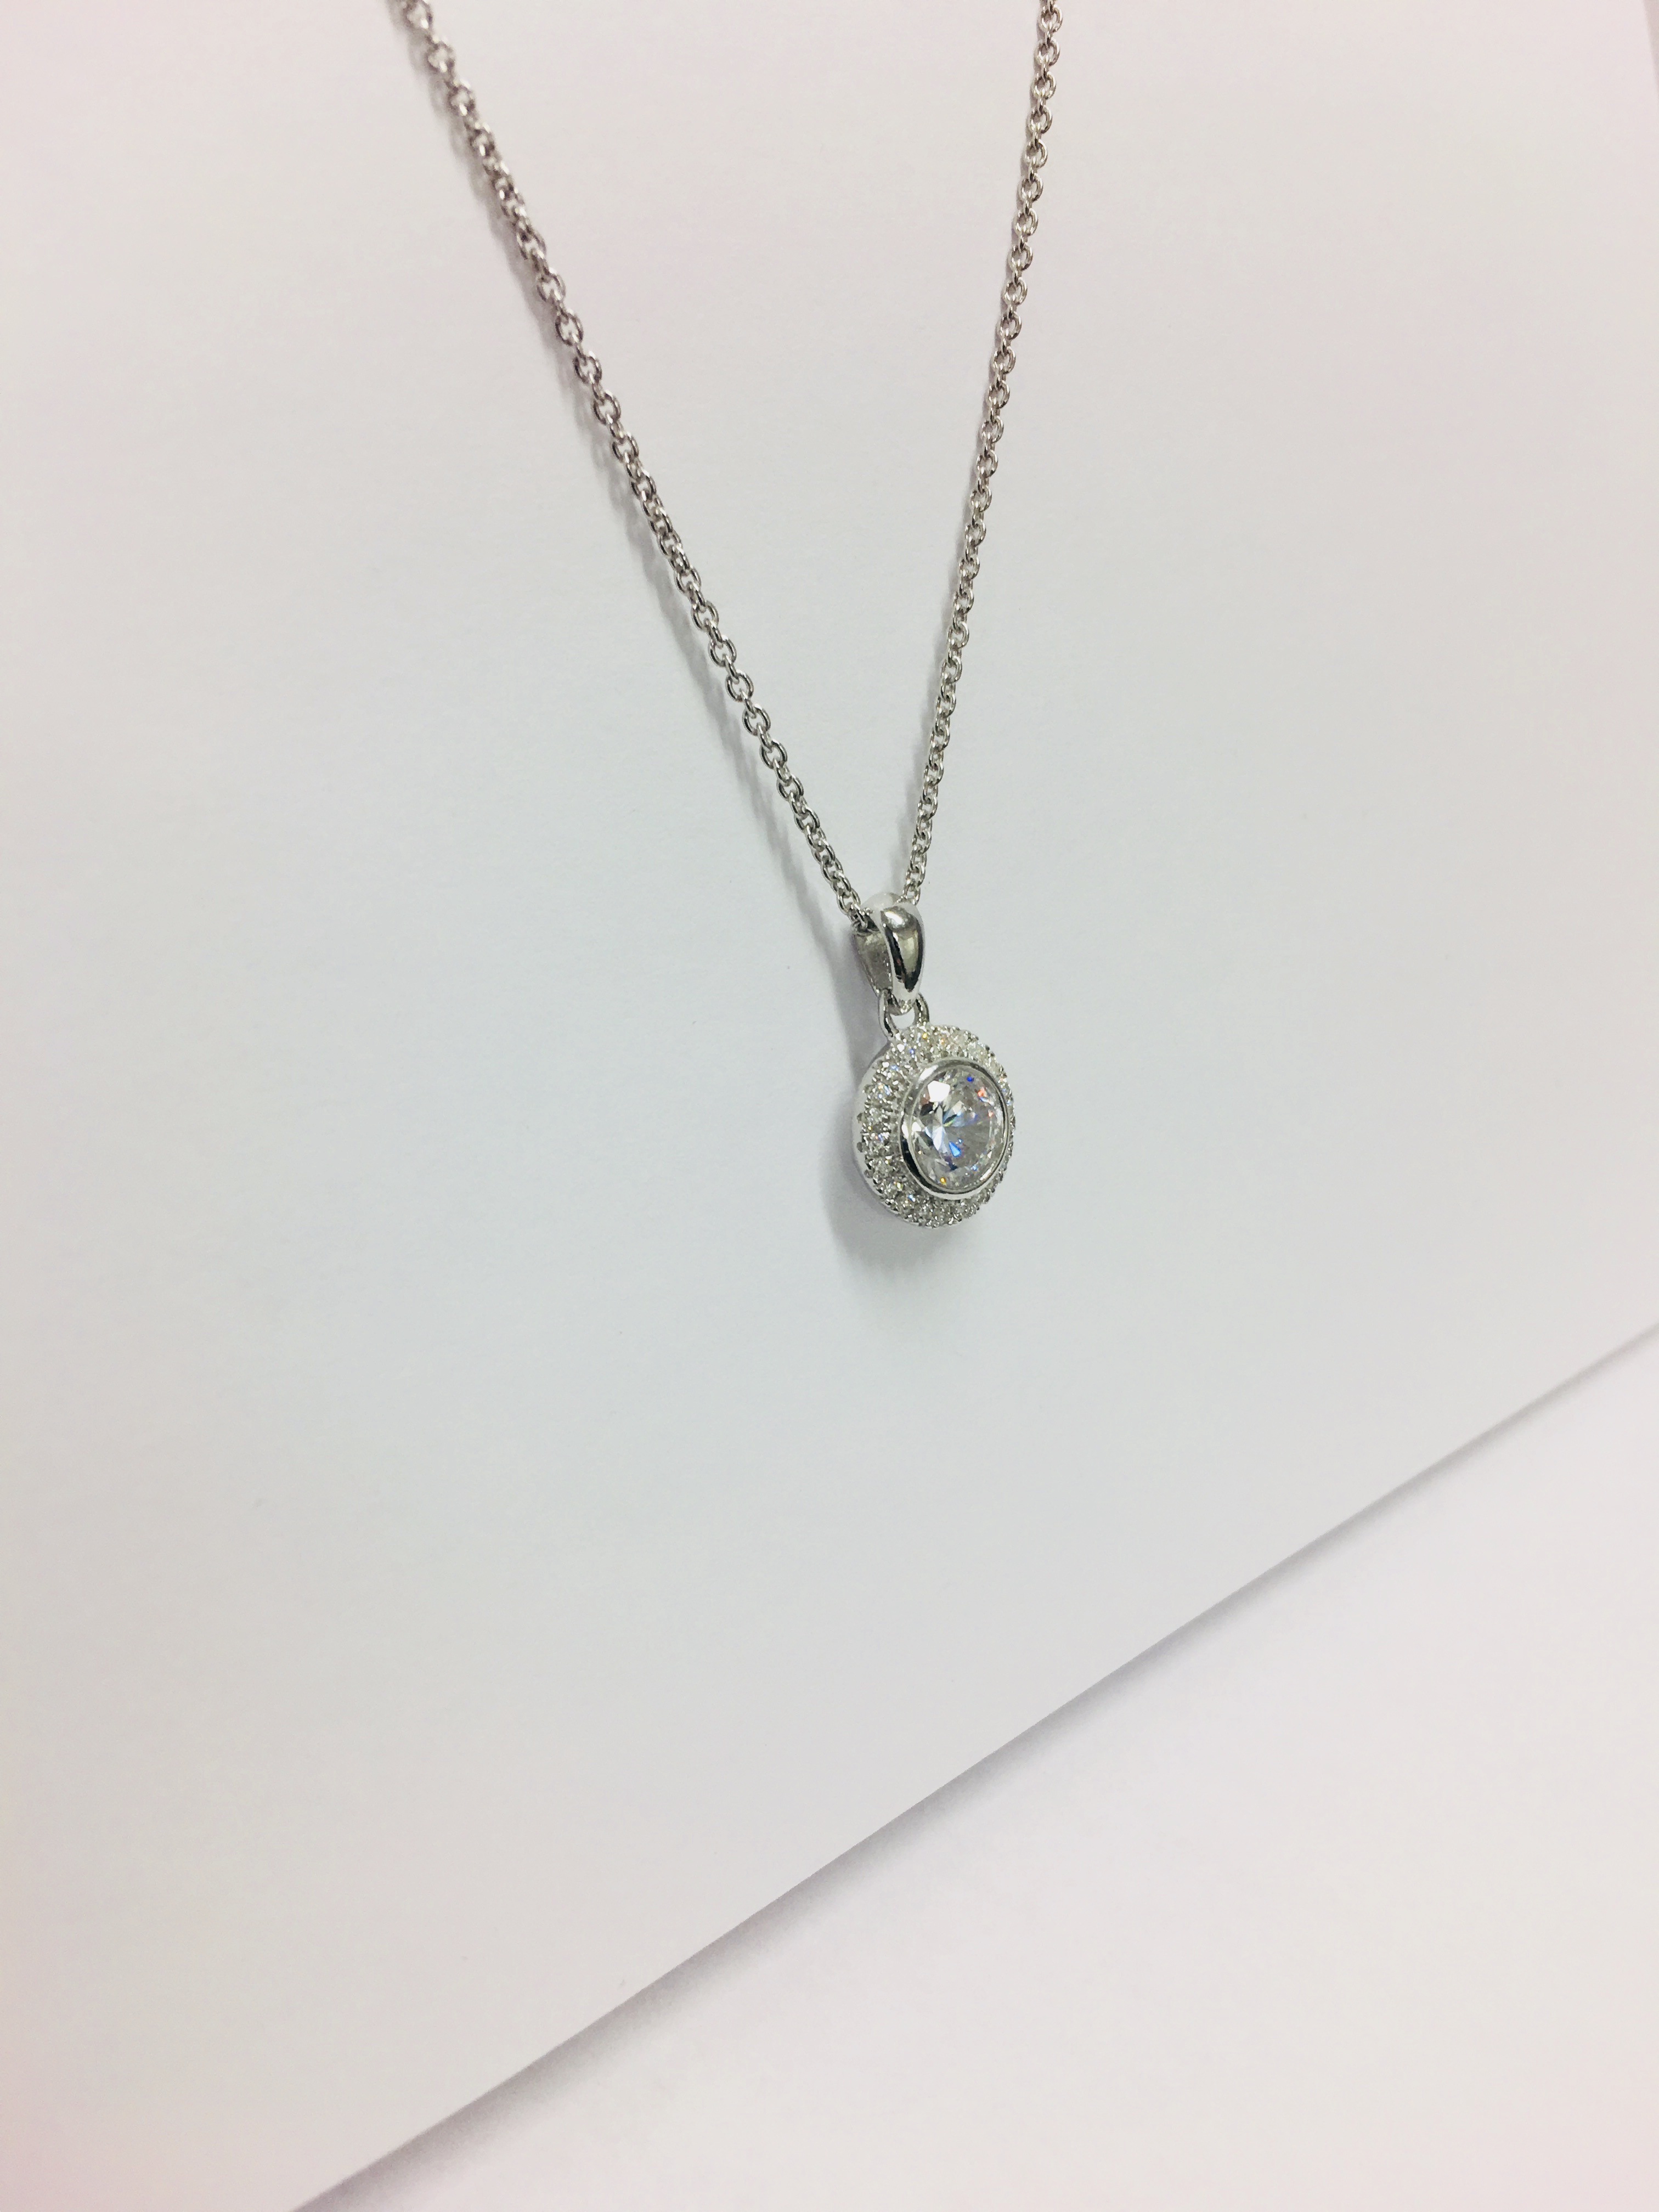 0.50ct diamond set pendant. Brilliant cut diamond Hcolour, si1 clarity. Halo setting with diamonds - Image 4 of 5